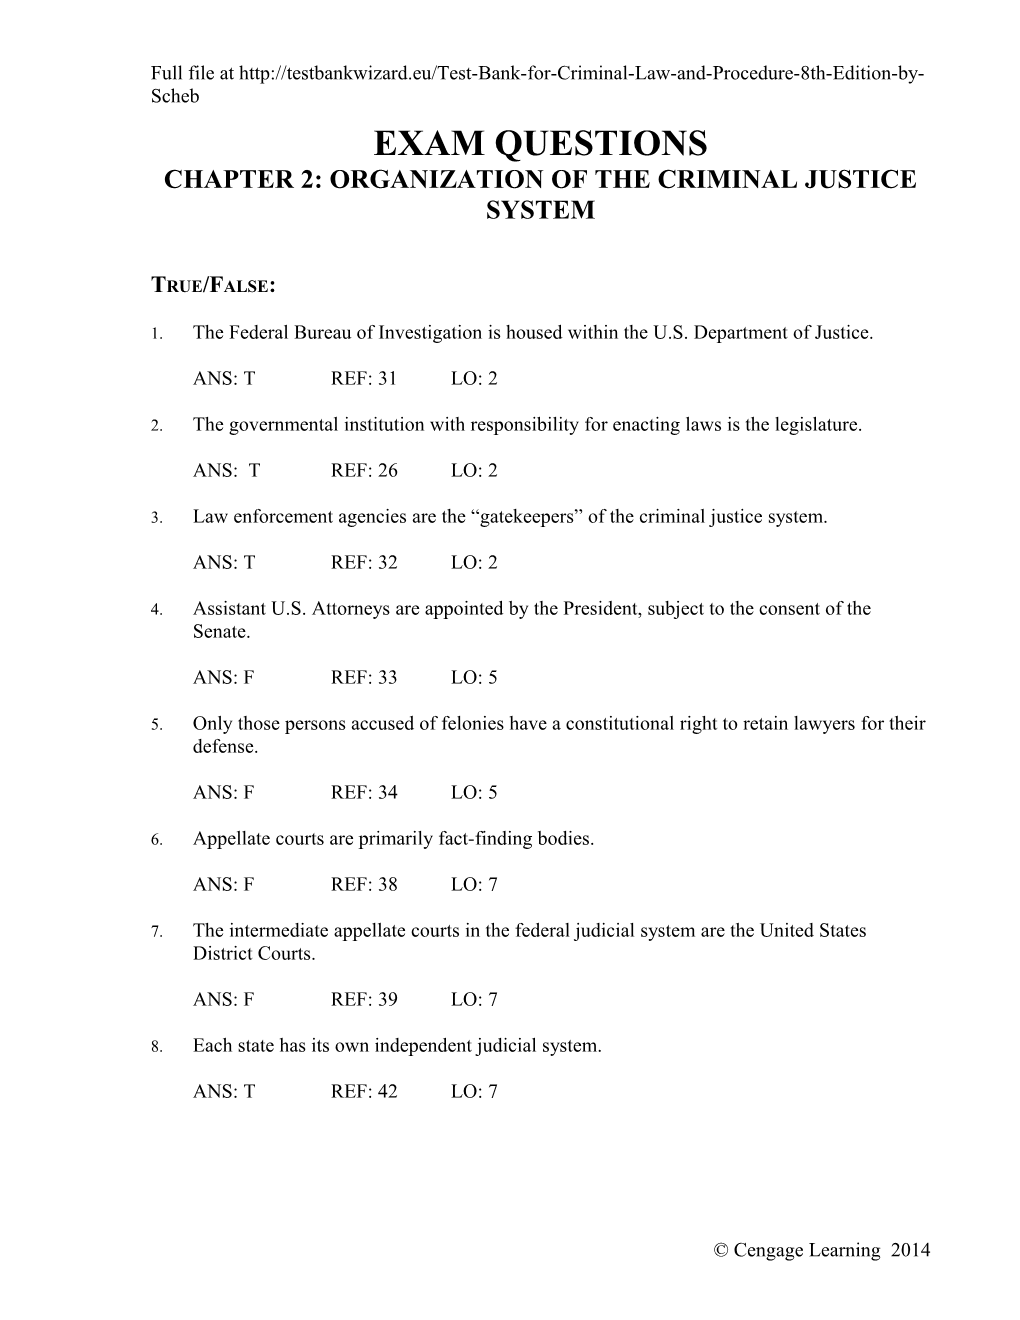 Chapter 2: Organization of the CJ System